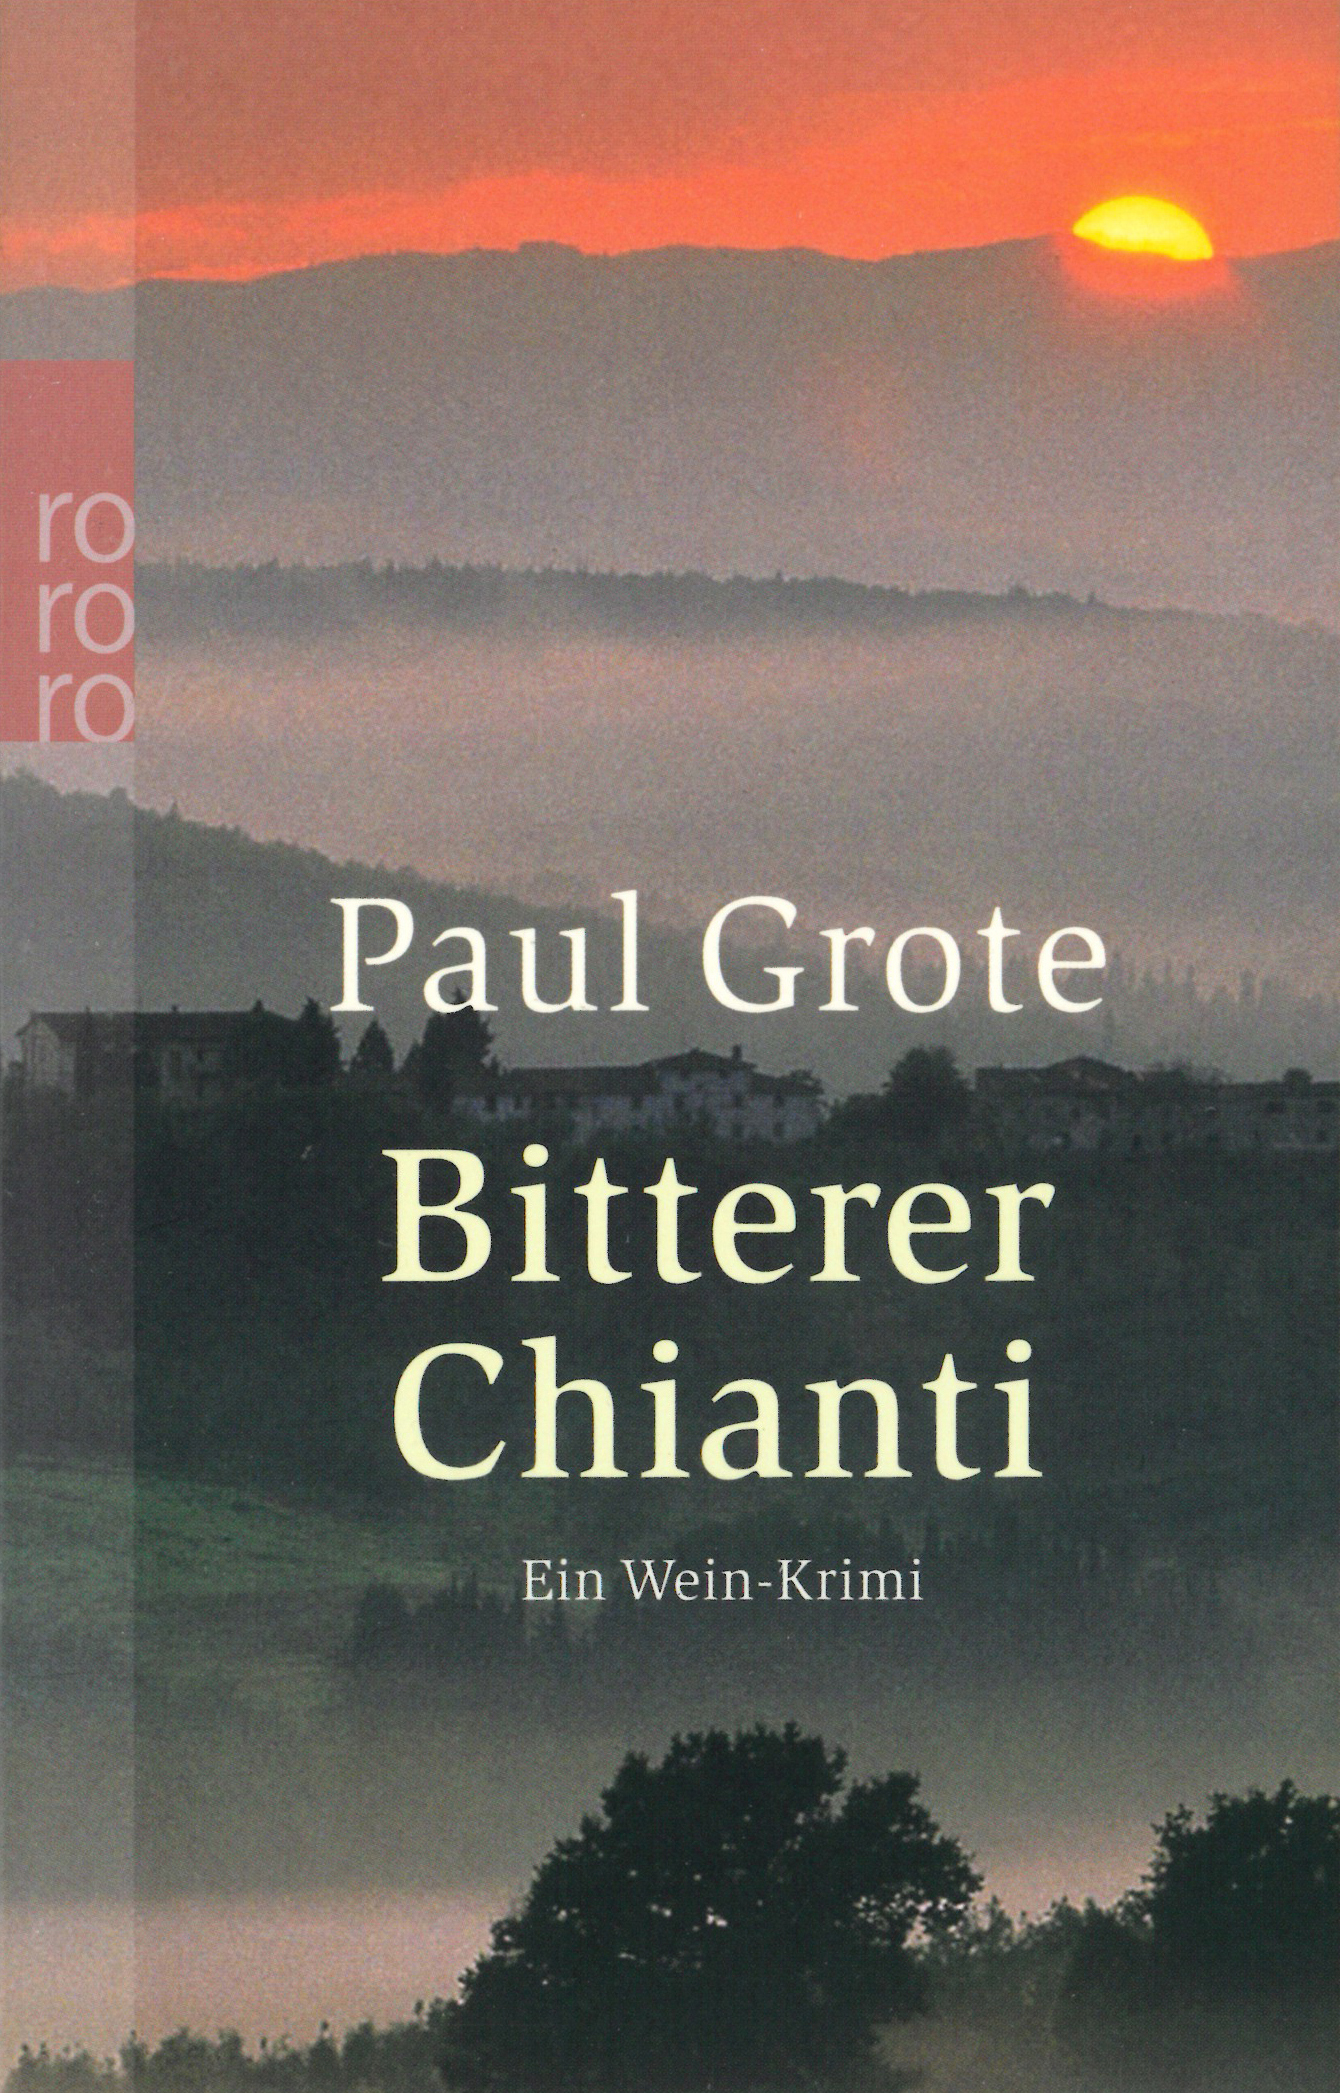 Bitterer Chianti - Paul Grote - Geschenke & Co. - Bücher & Accessoires